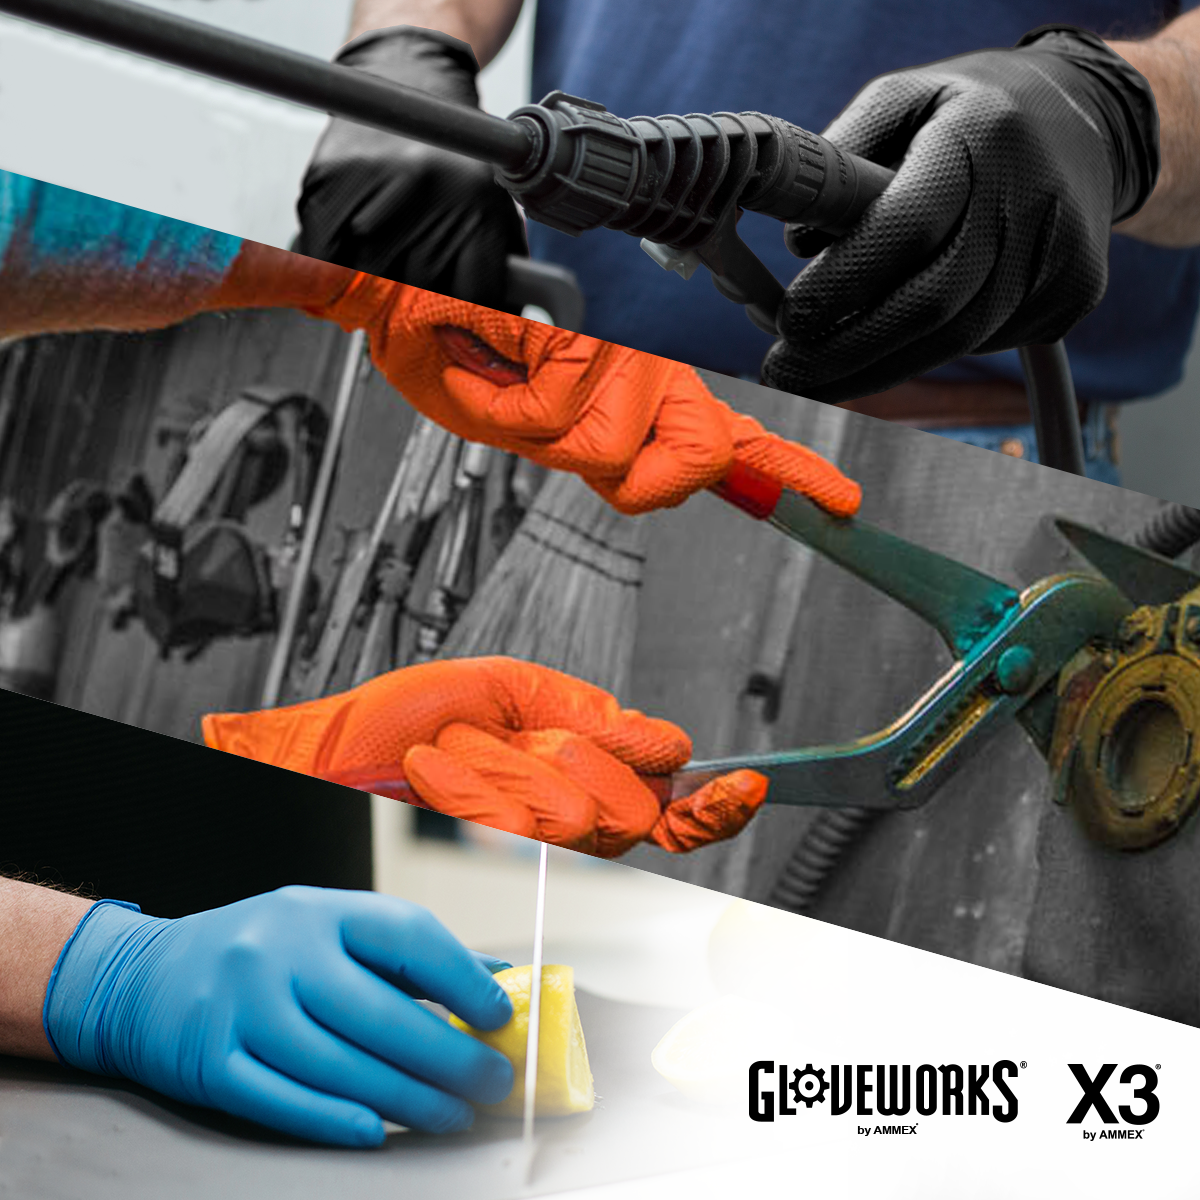 Gloveworks black nitrile, orange nitrile, and X3 blue nitrile are shown in use.